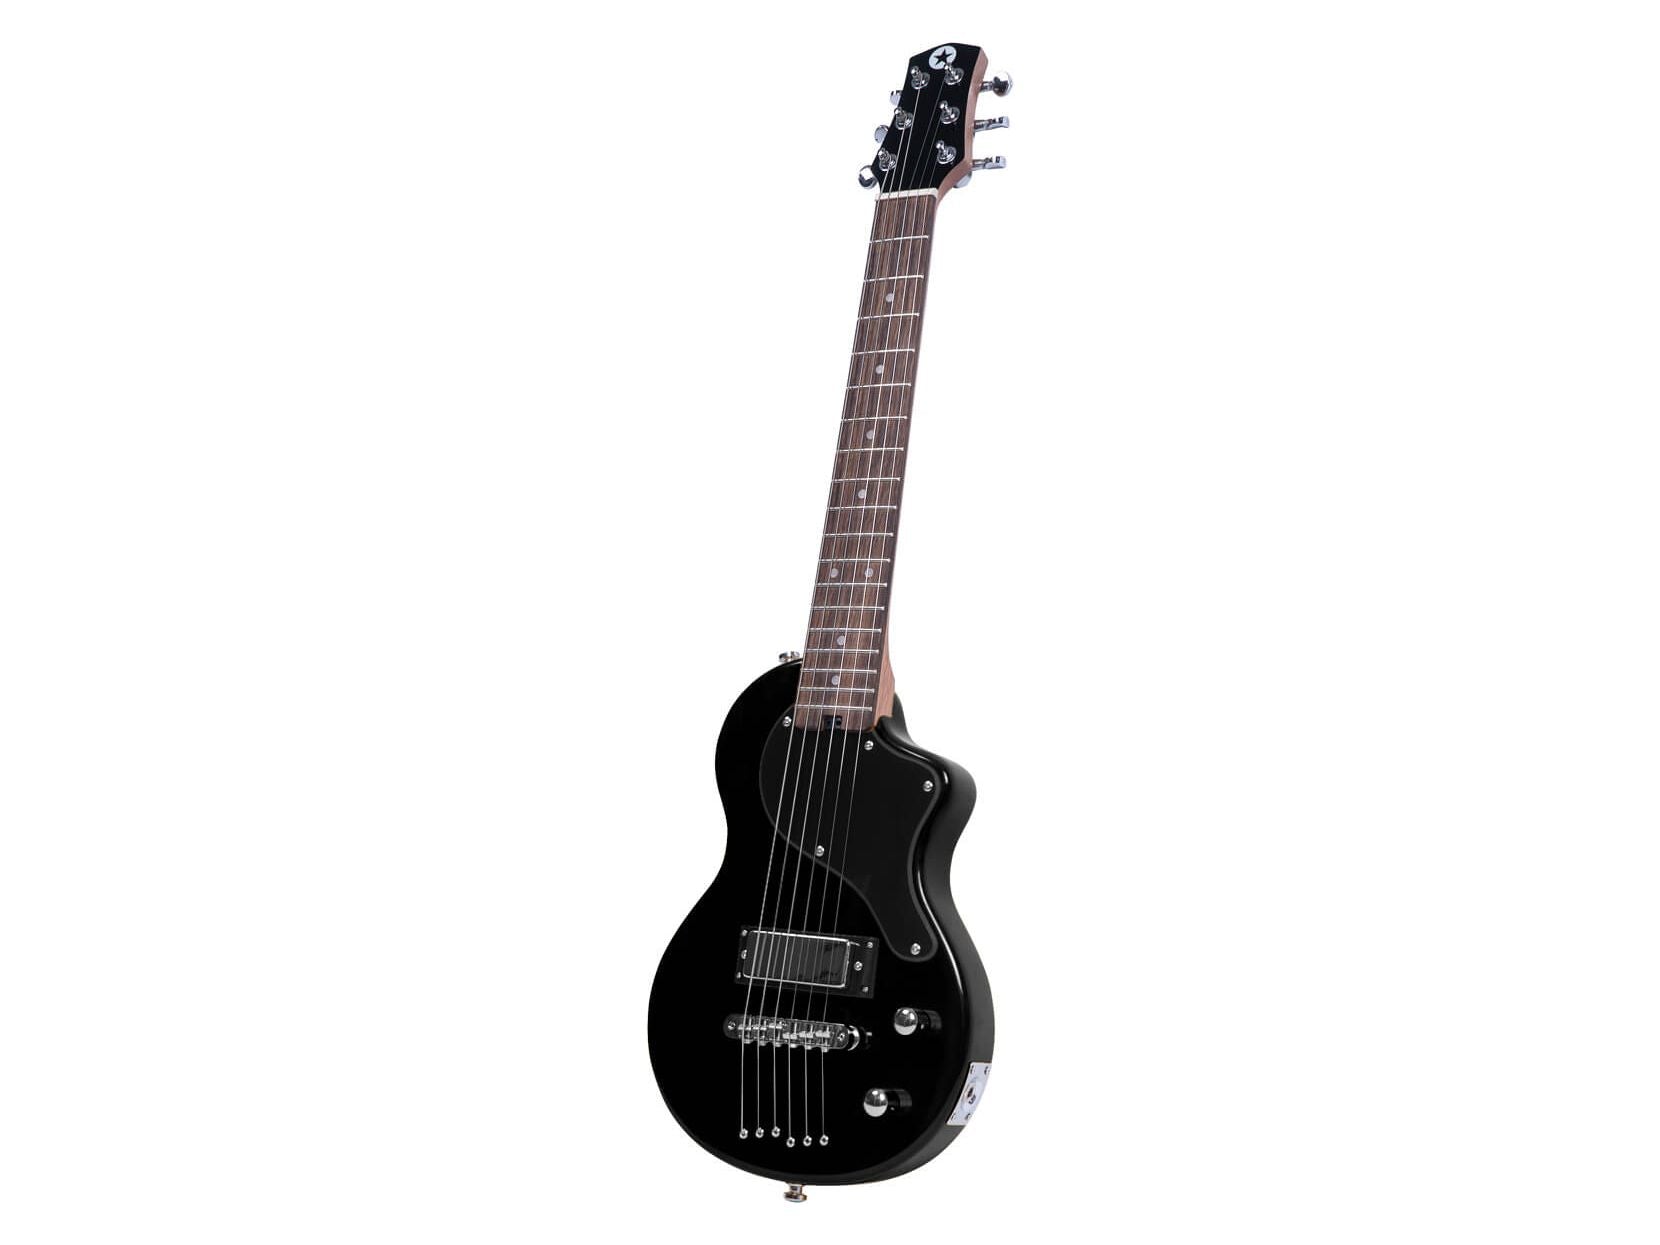 Blackstar Carry-on ST Guitar Black